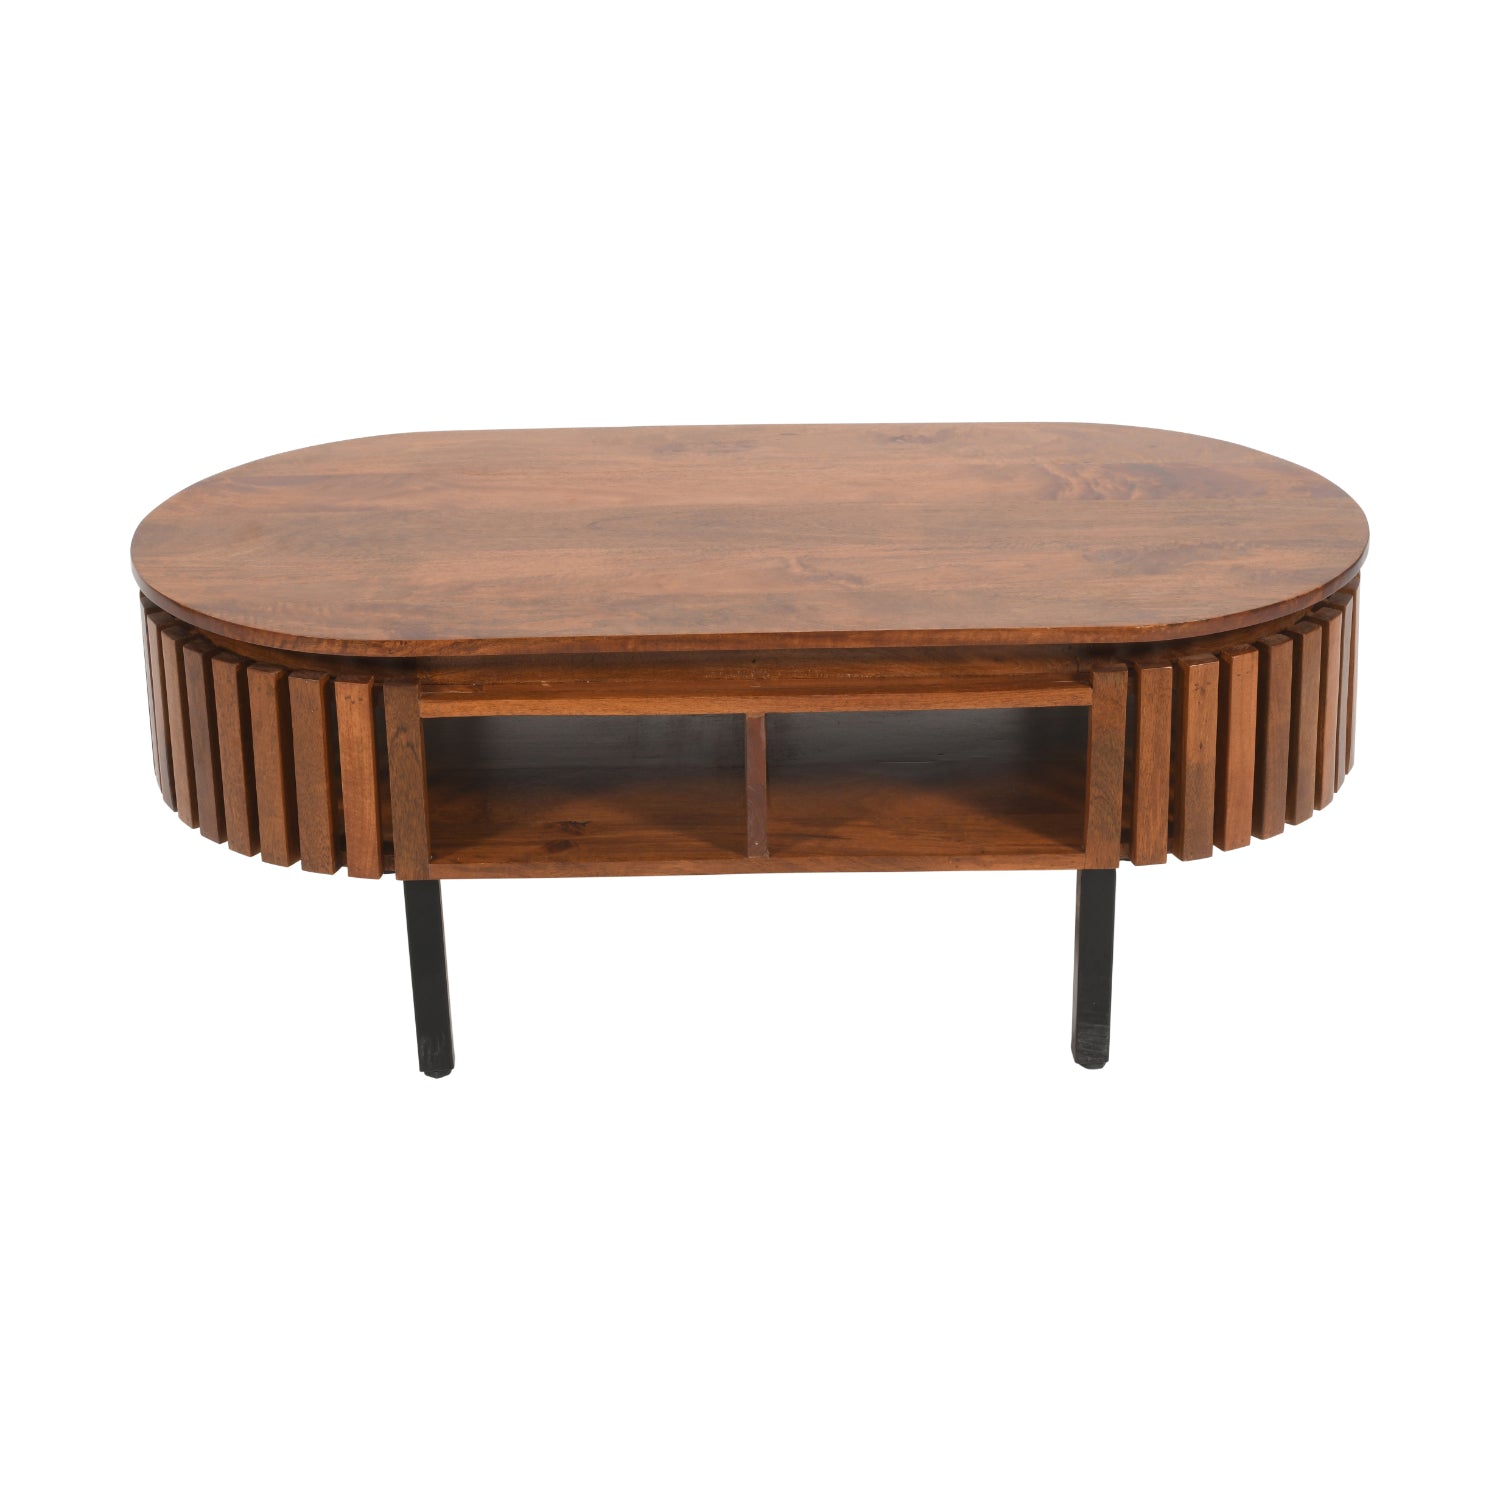 Bronte solid wood slatted coffee table with open shelf in warm walnut finish | malletandplane.com